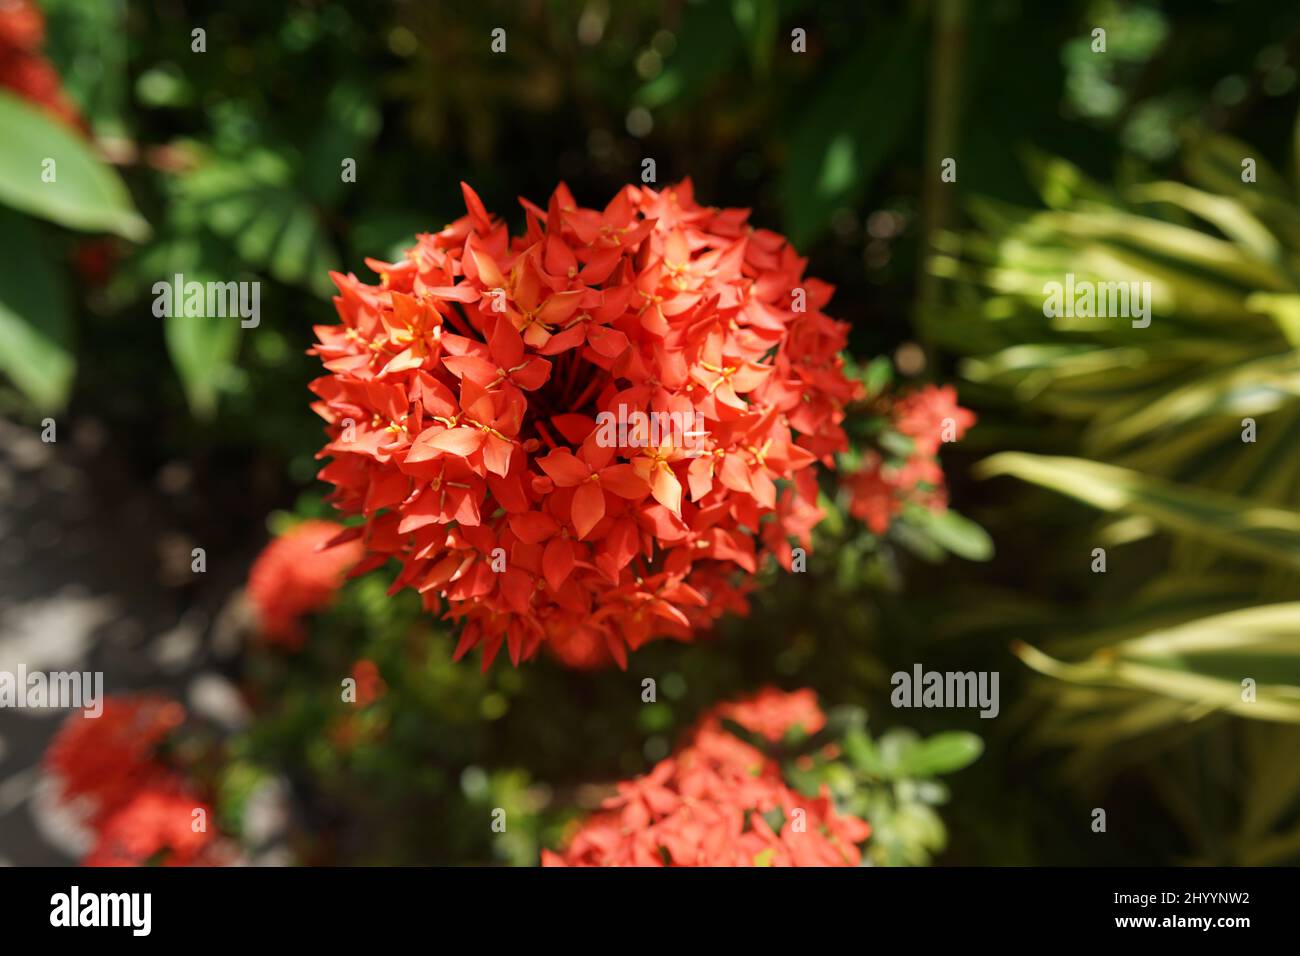 Closeup shot of red Ixora flowers growing in the garden Stock Photo